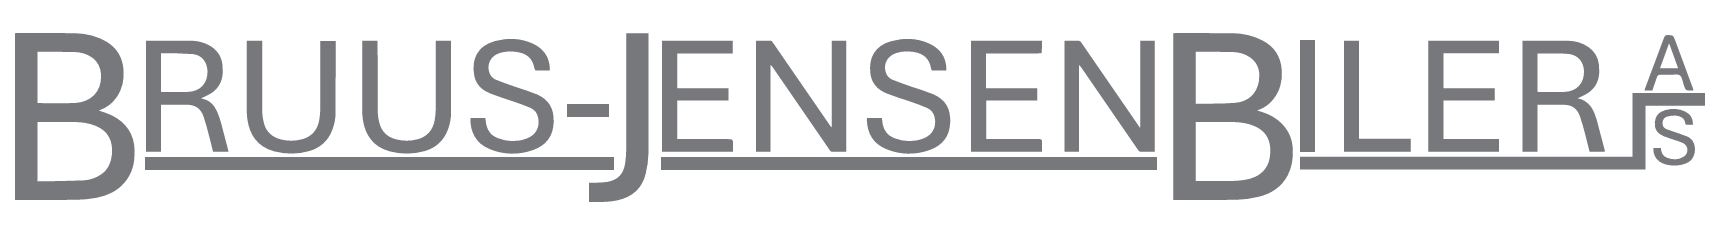 Bruus-Jensen Biler A/S logo